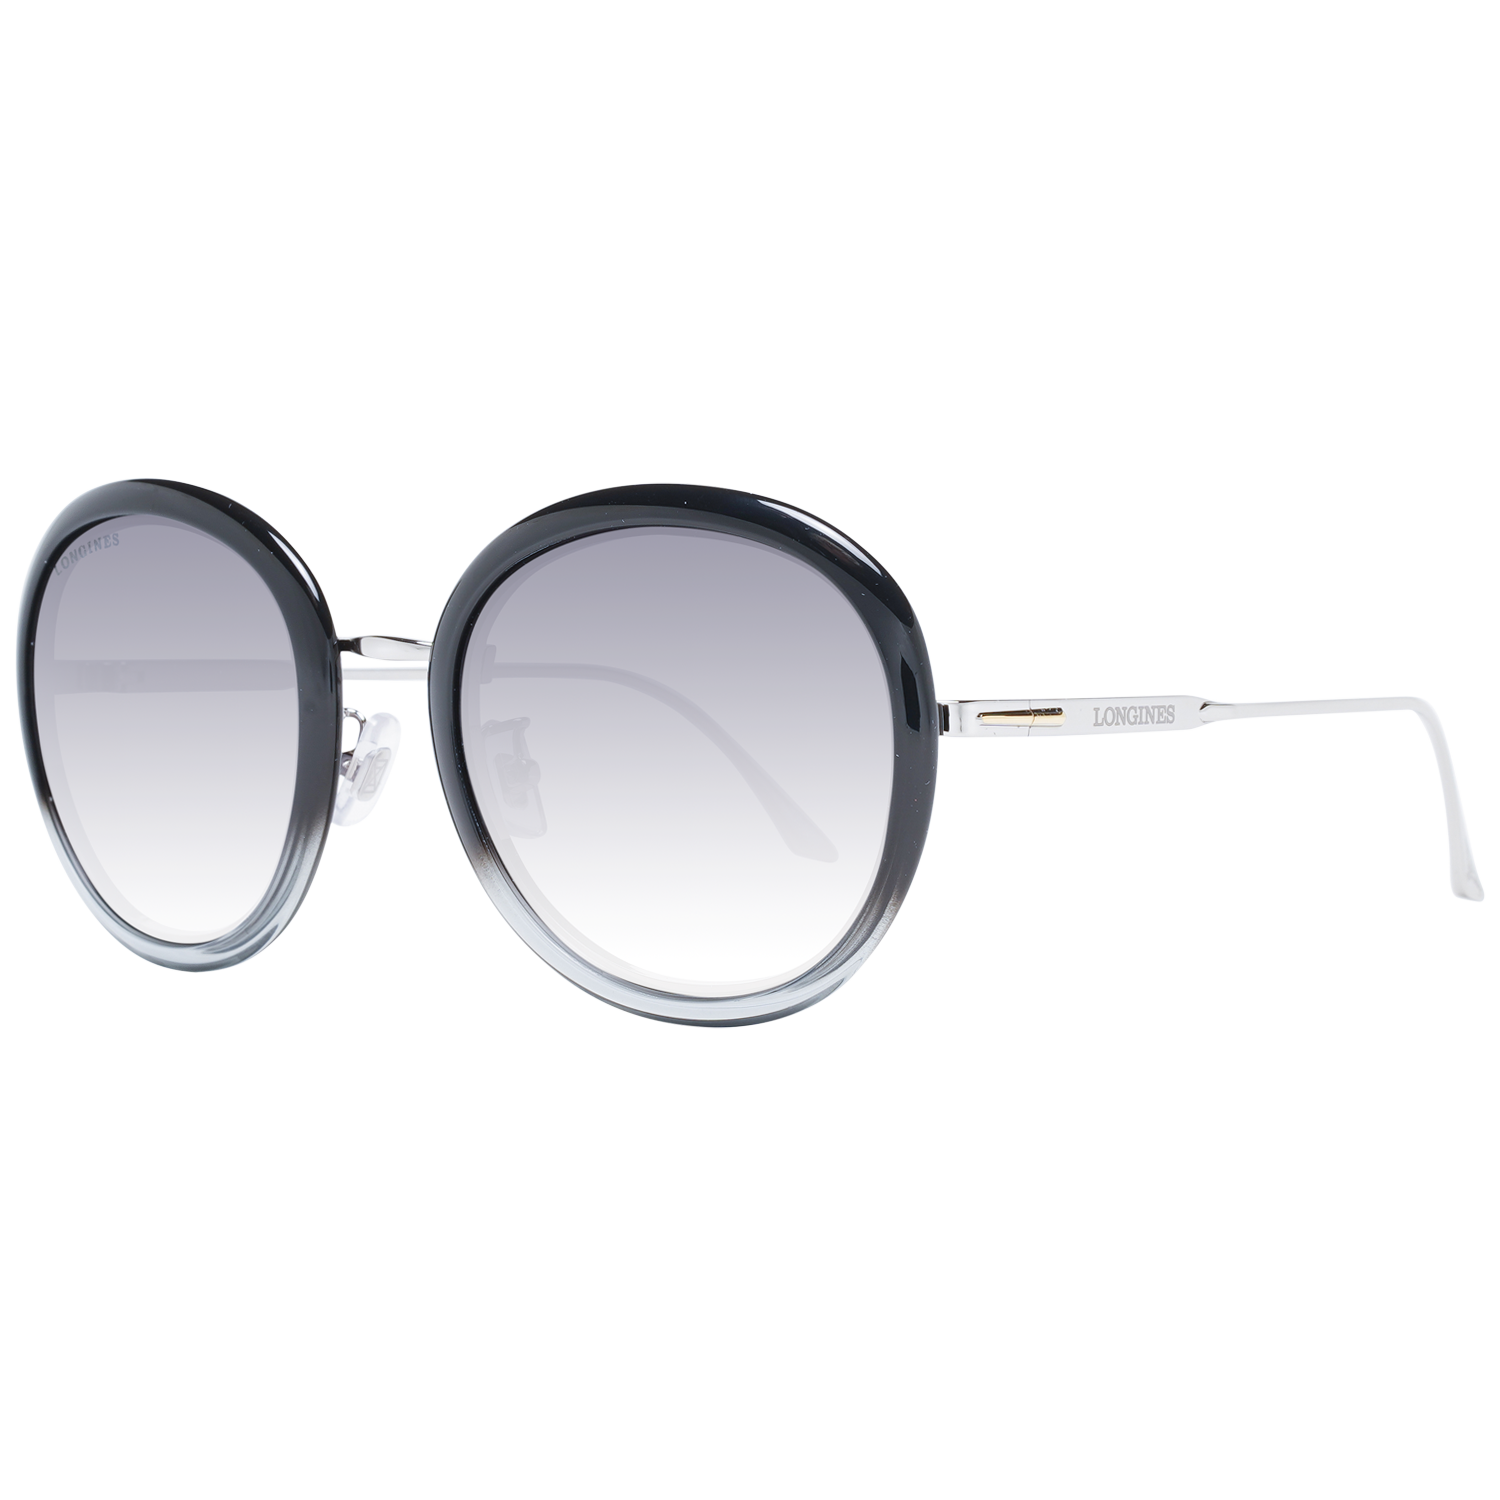 Longines Sunglasses Longines Sunglasses LG0011-H 01B 56mm Eyeglasses Eyewear UK USA Australia 